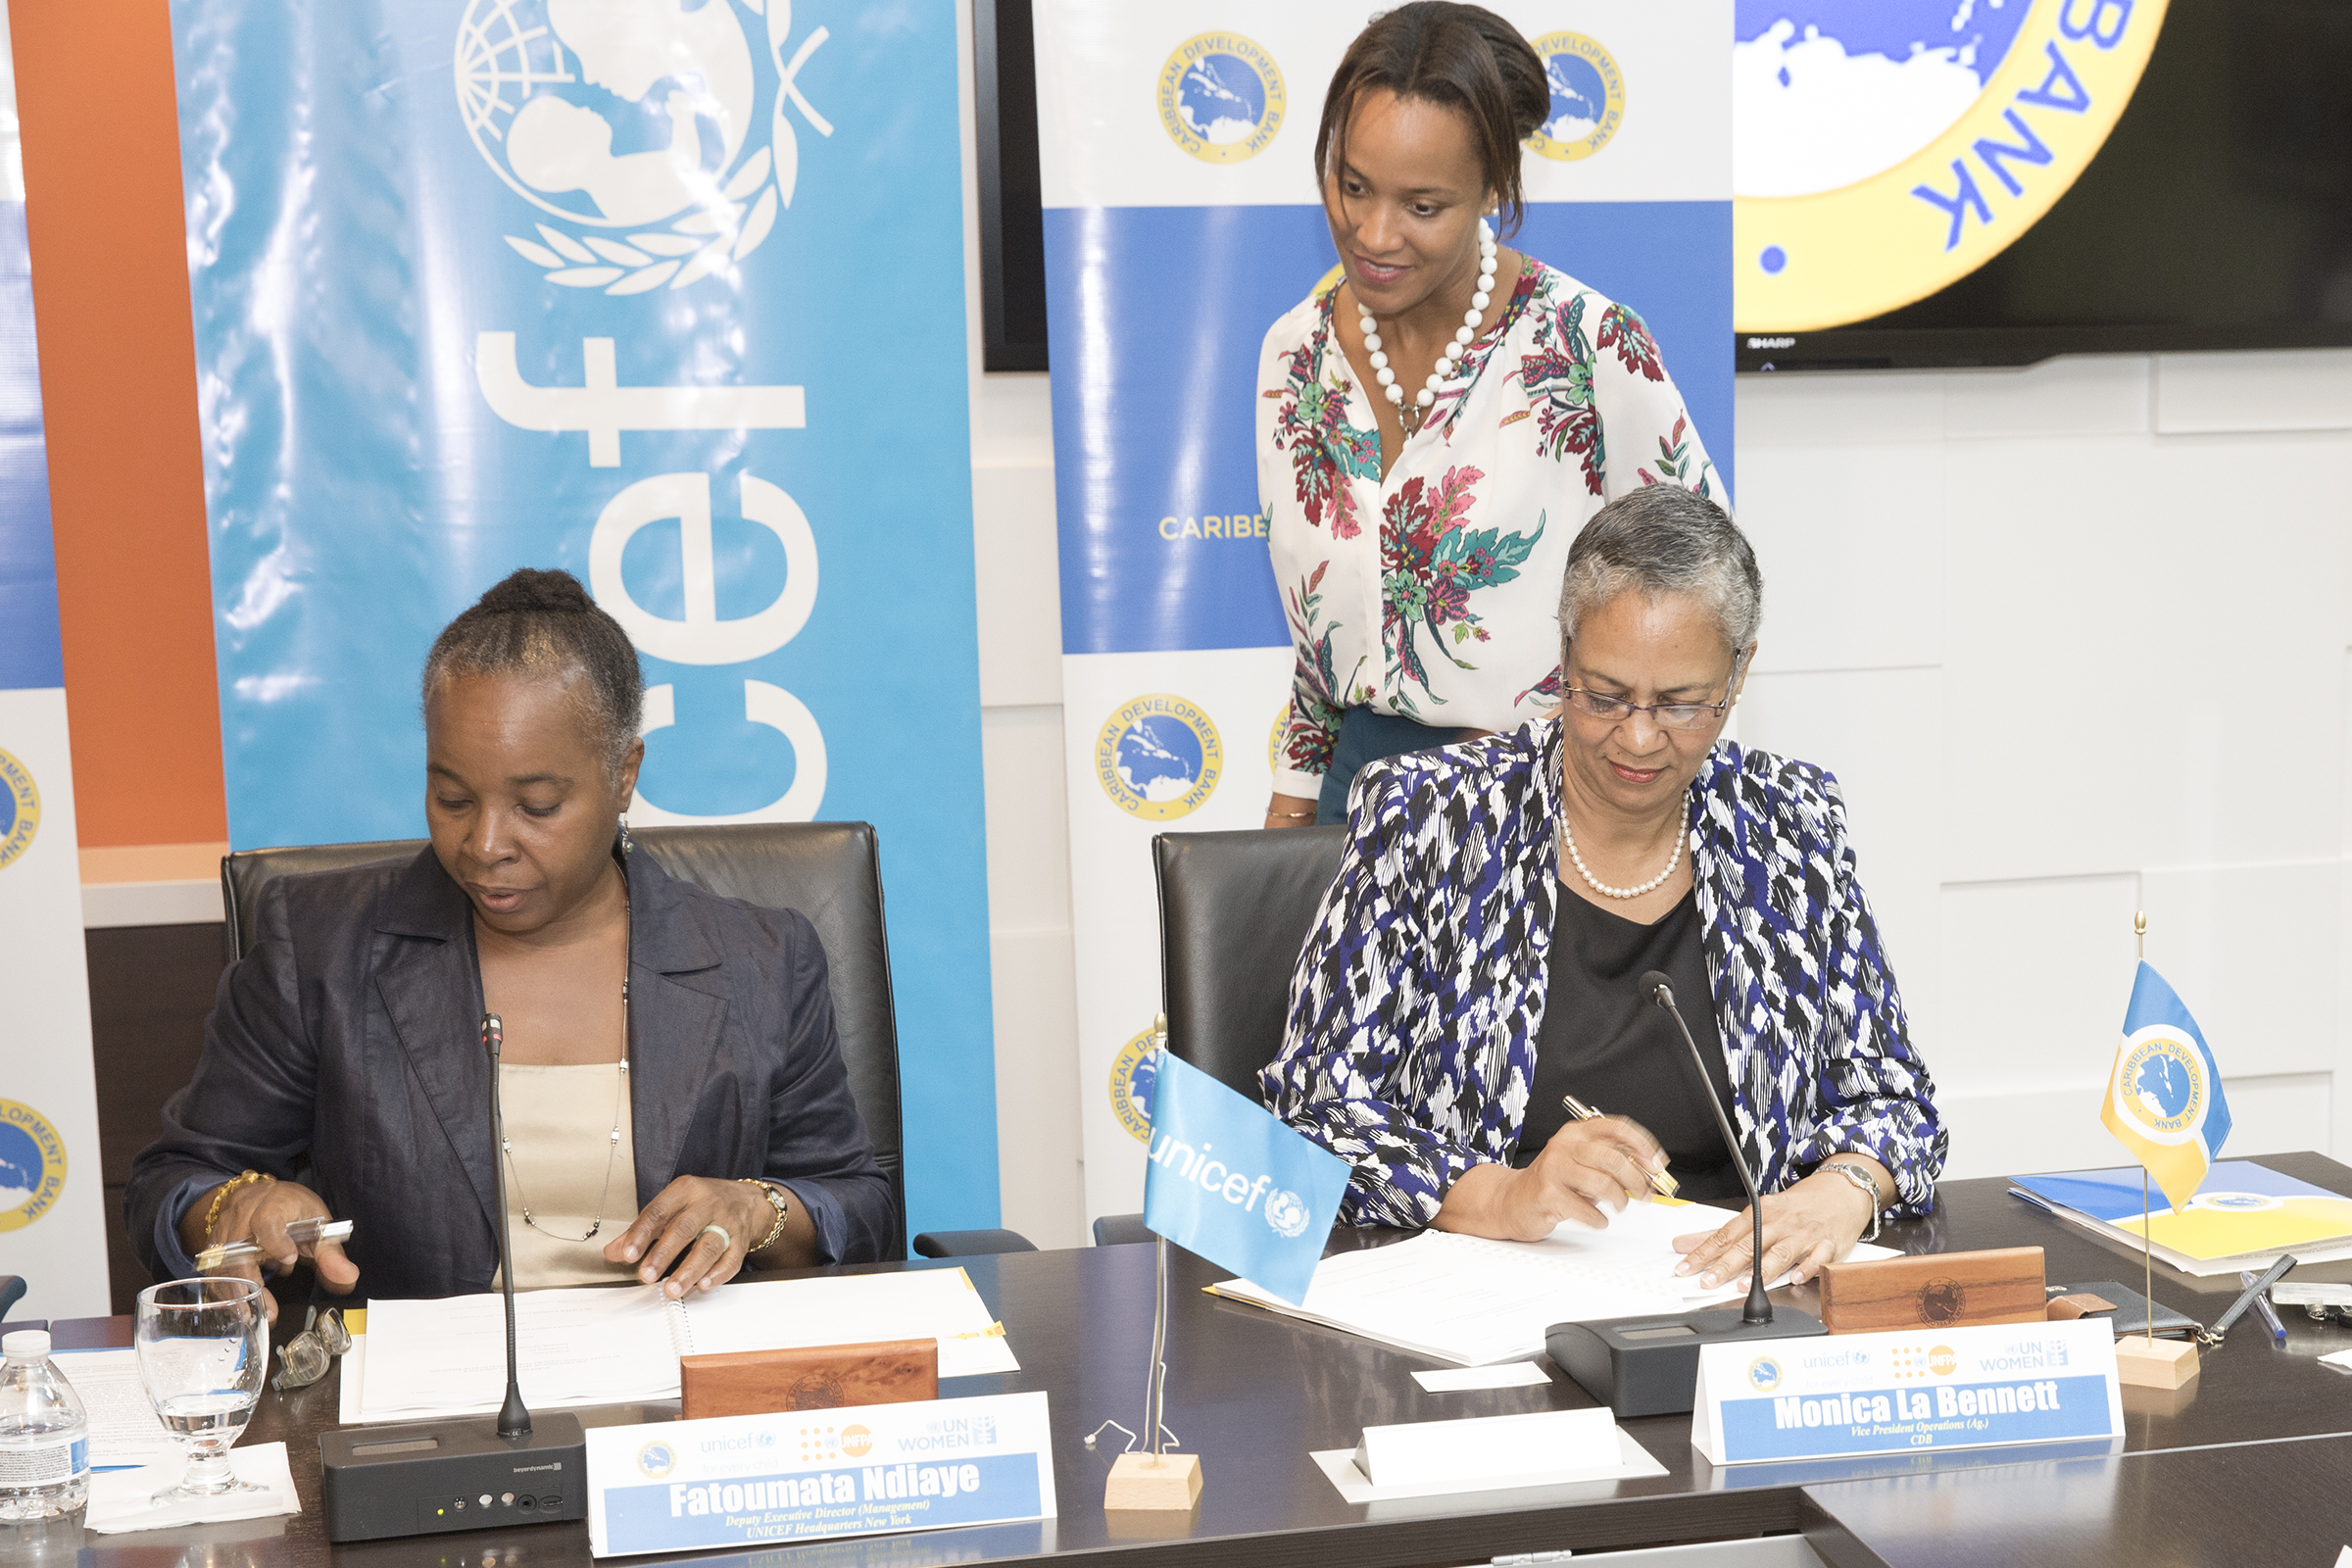 Fatoumata Ndiaye, Deputy Executive Director, UNICEF Headquarters, New York (left) and Monica La Bennett, Acting Vice-President (Operations), CDB (right).